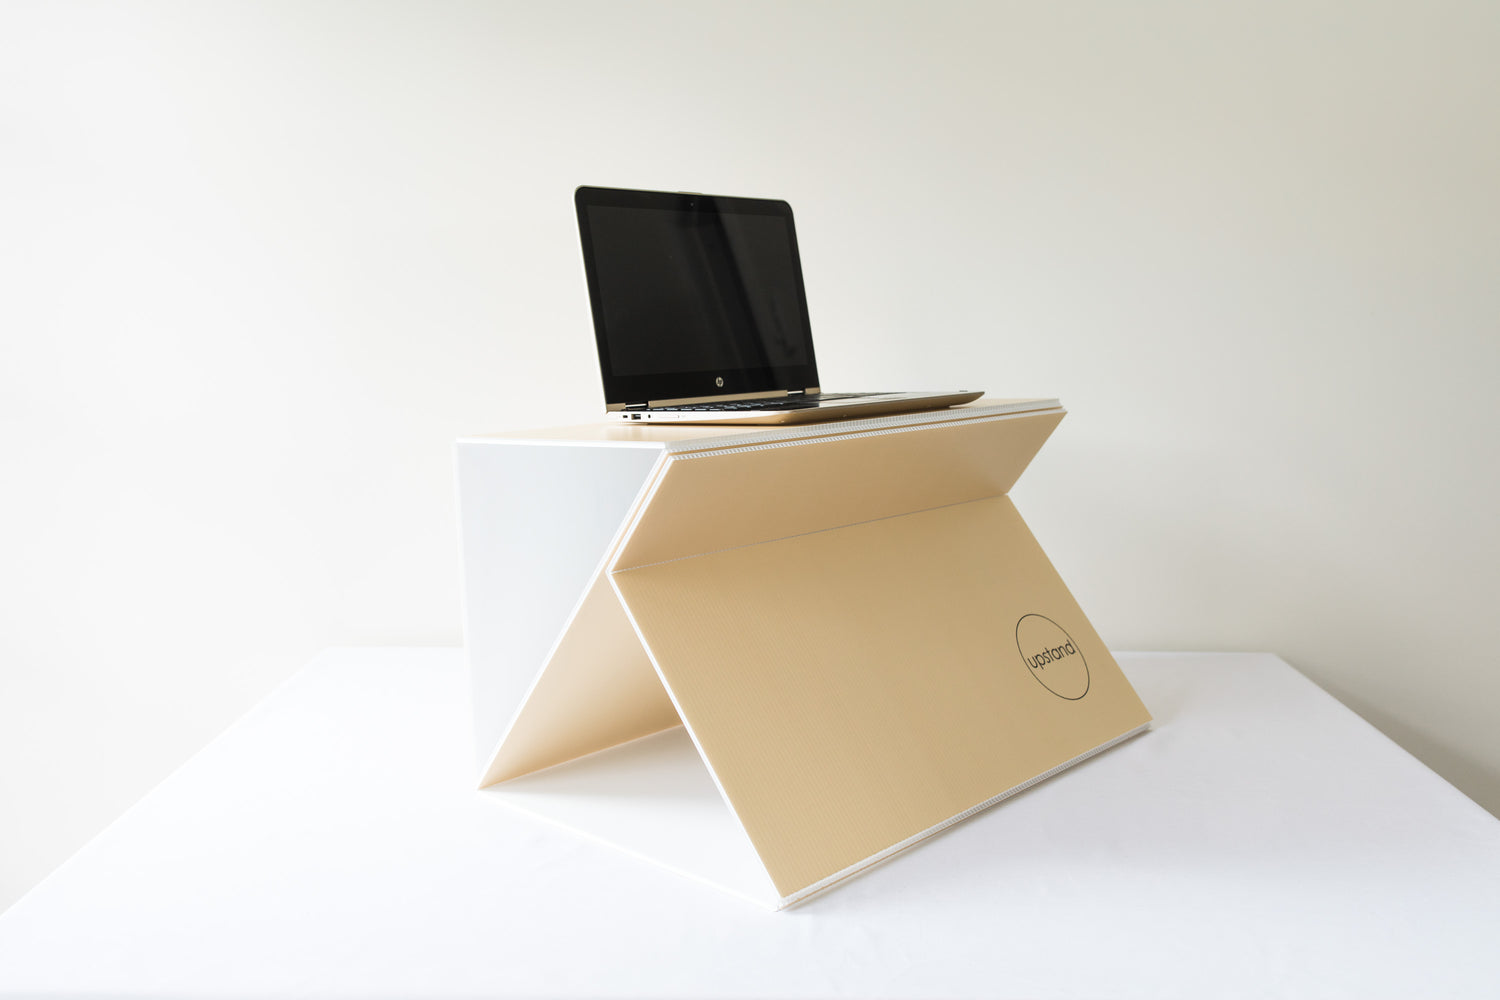 Upstand flat pack standing desk, small standing desk, affordable, light weight, sustainable standing desk, tabletop desk, pop up desk 